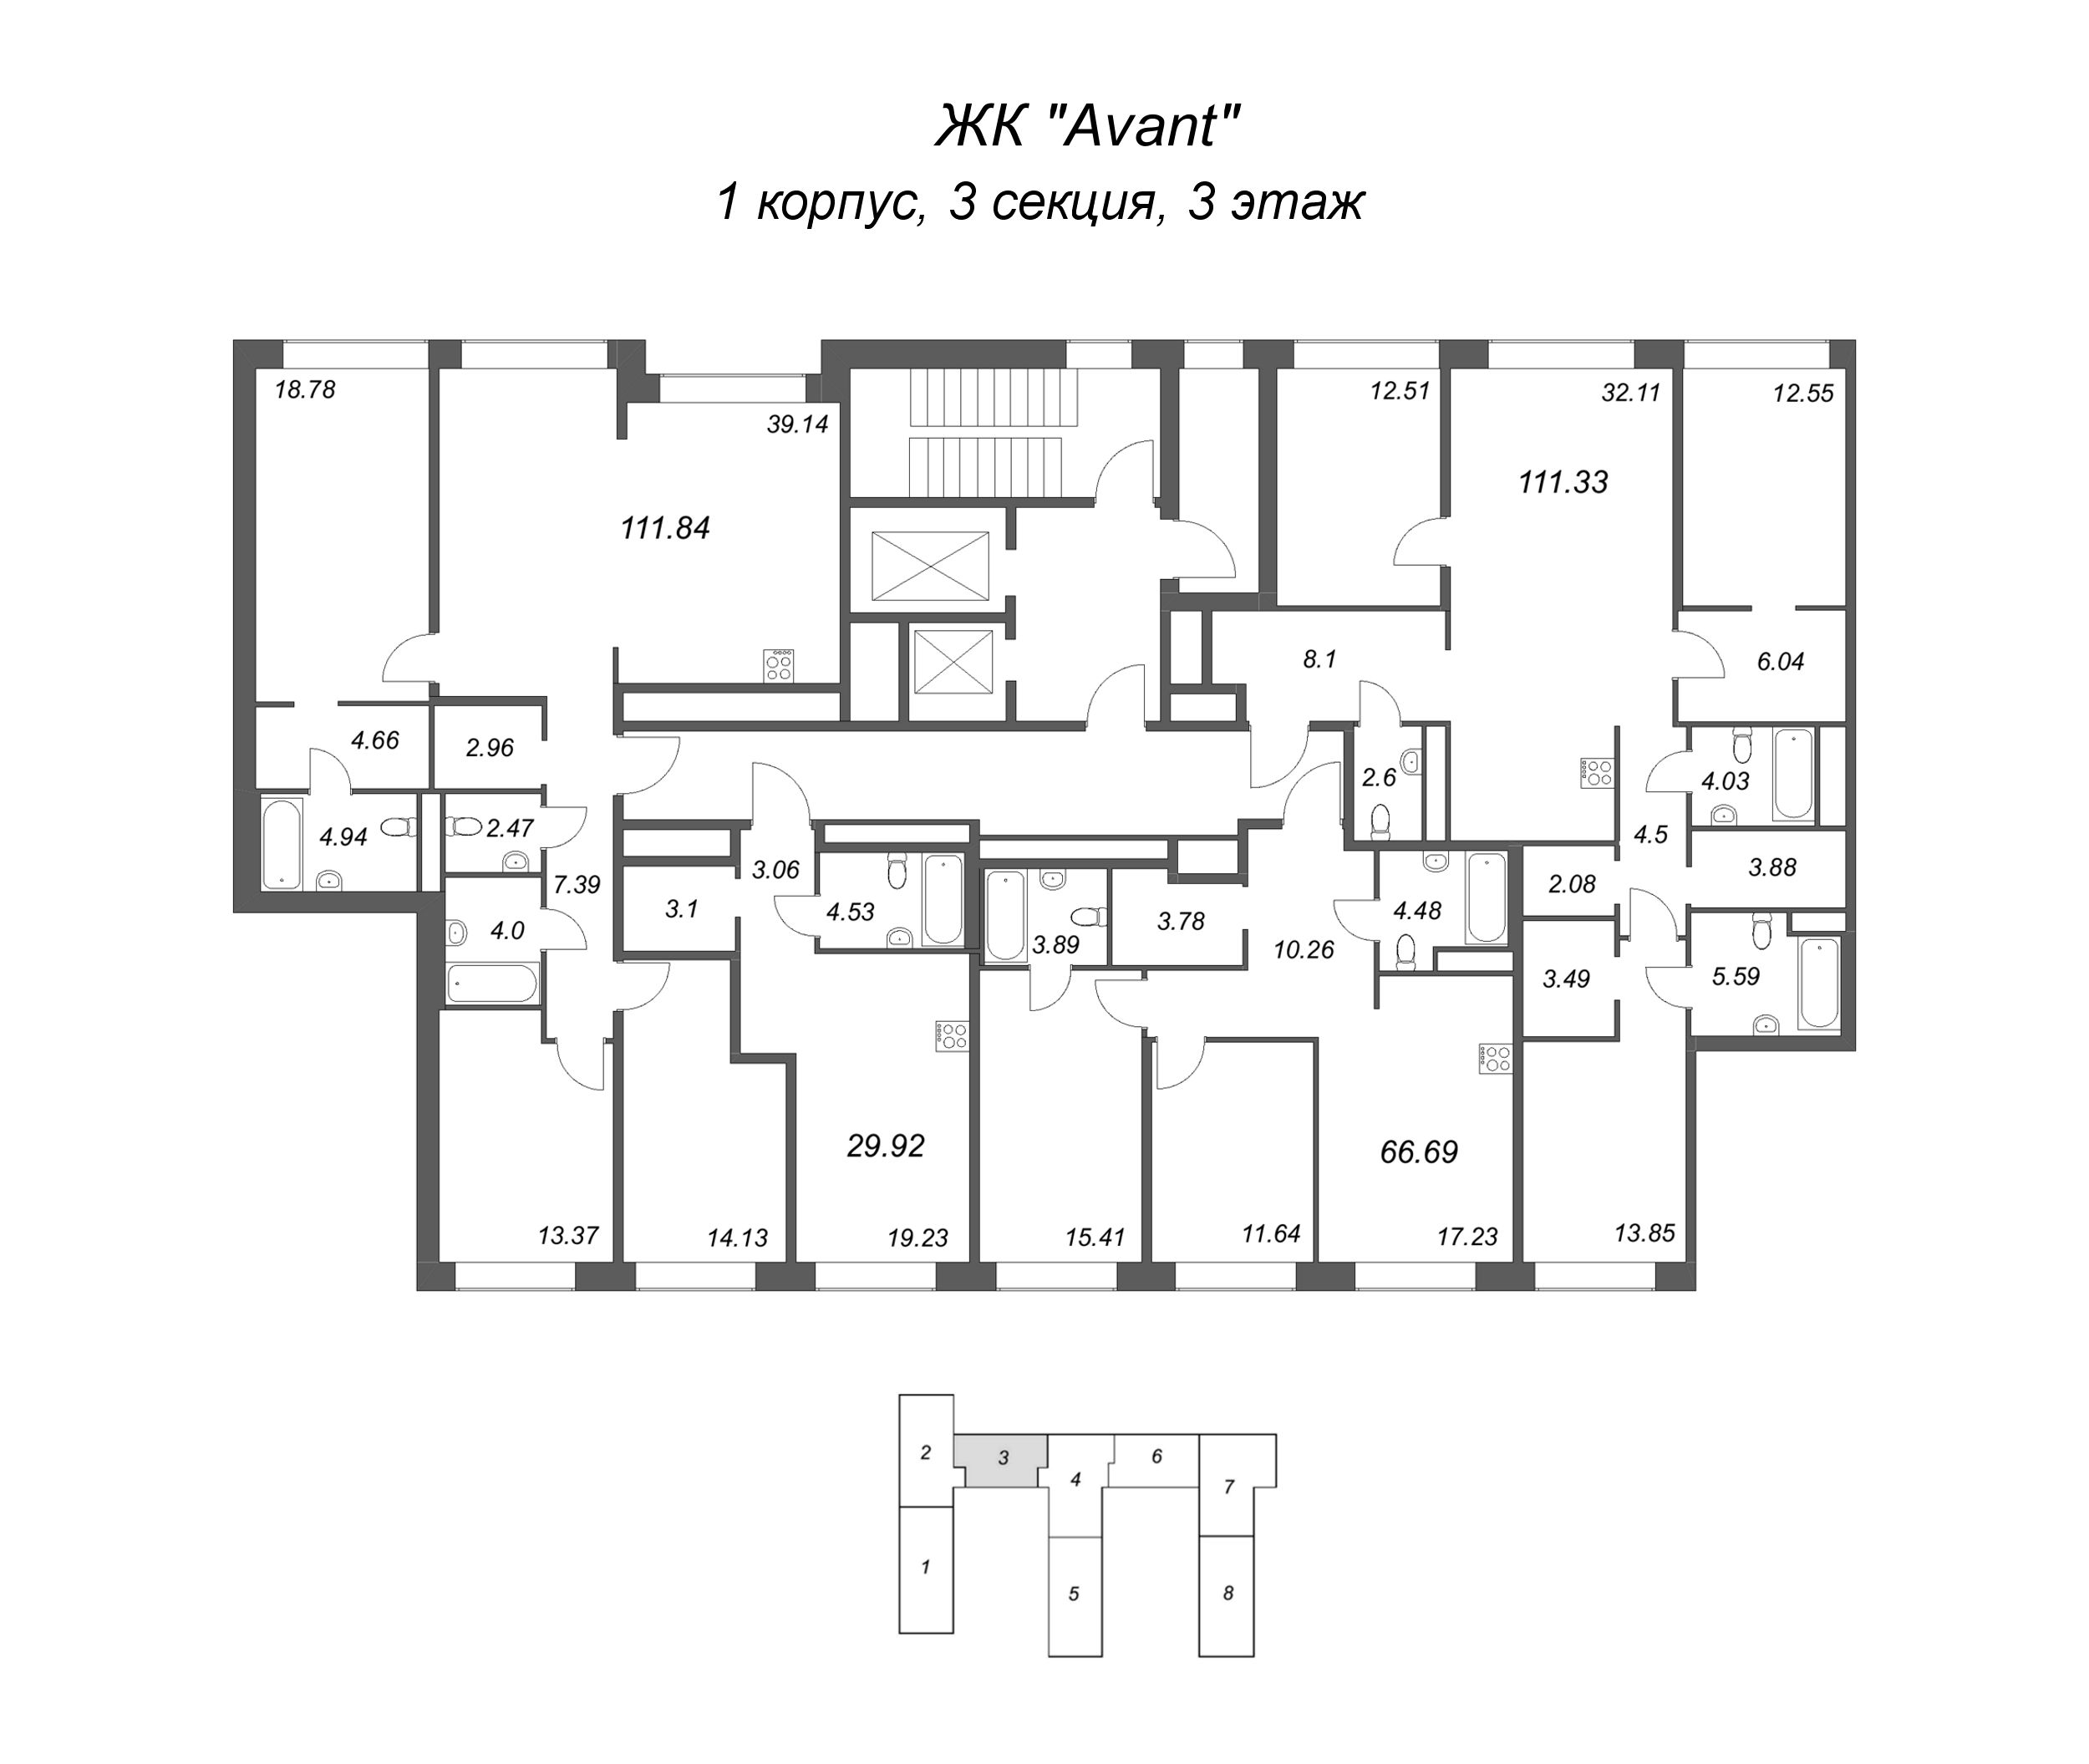 4-комнатная (Евро) квартира, 111.84 м² в ЖК "Avant" - планировка этажа